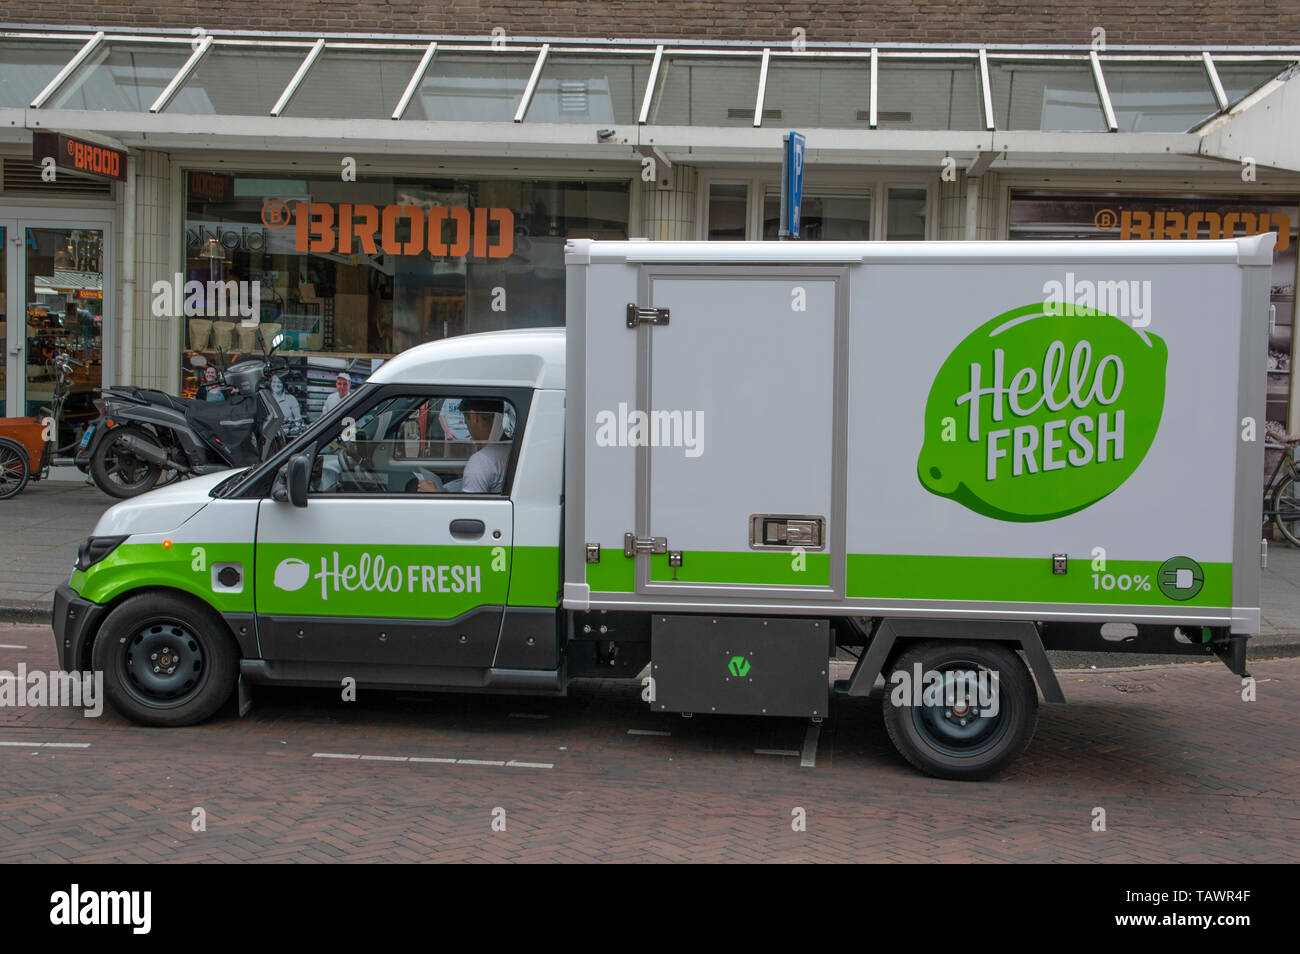 Hello Fresh Company Car At Amsterdam The Netherlands 2019 Stock Photo